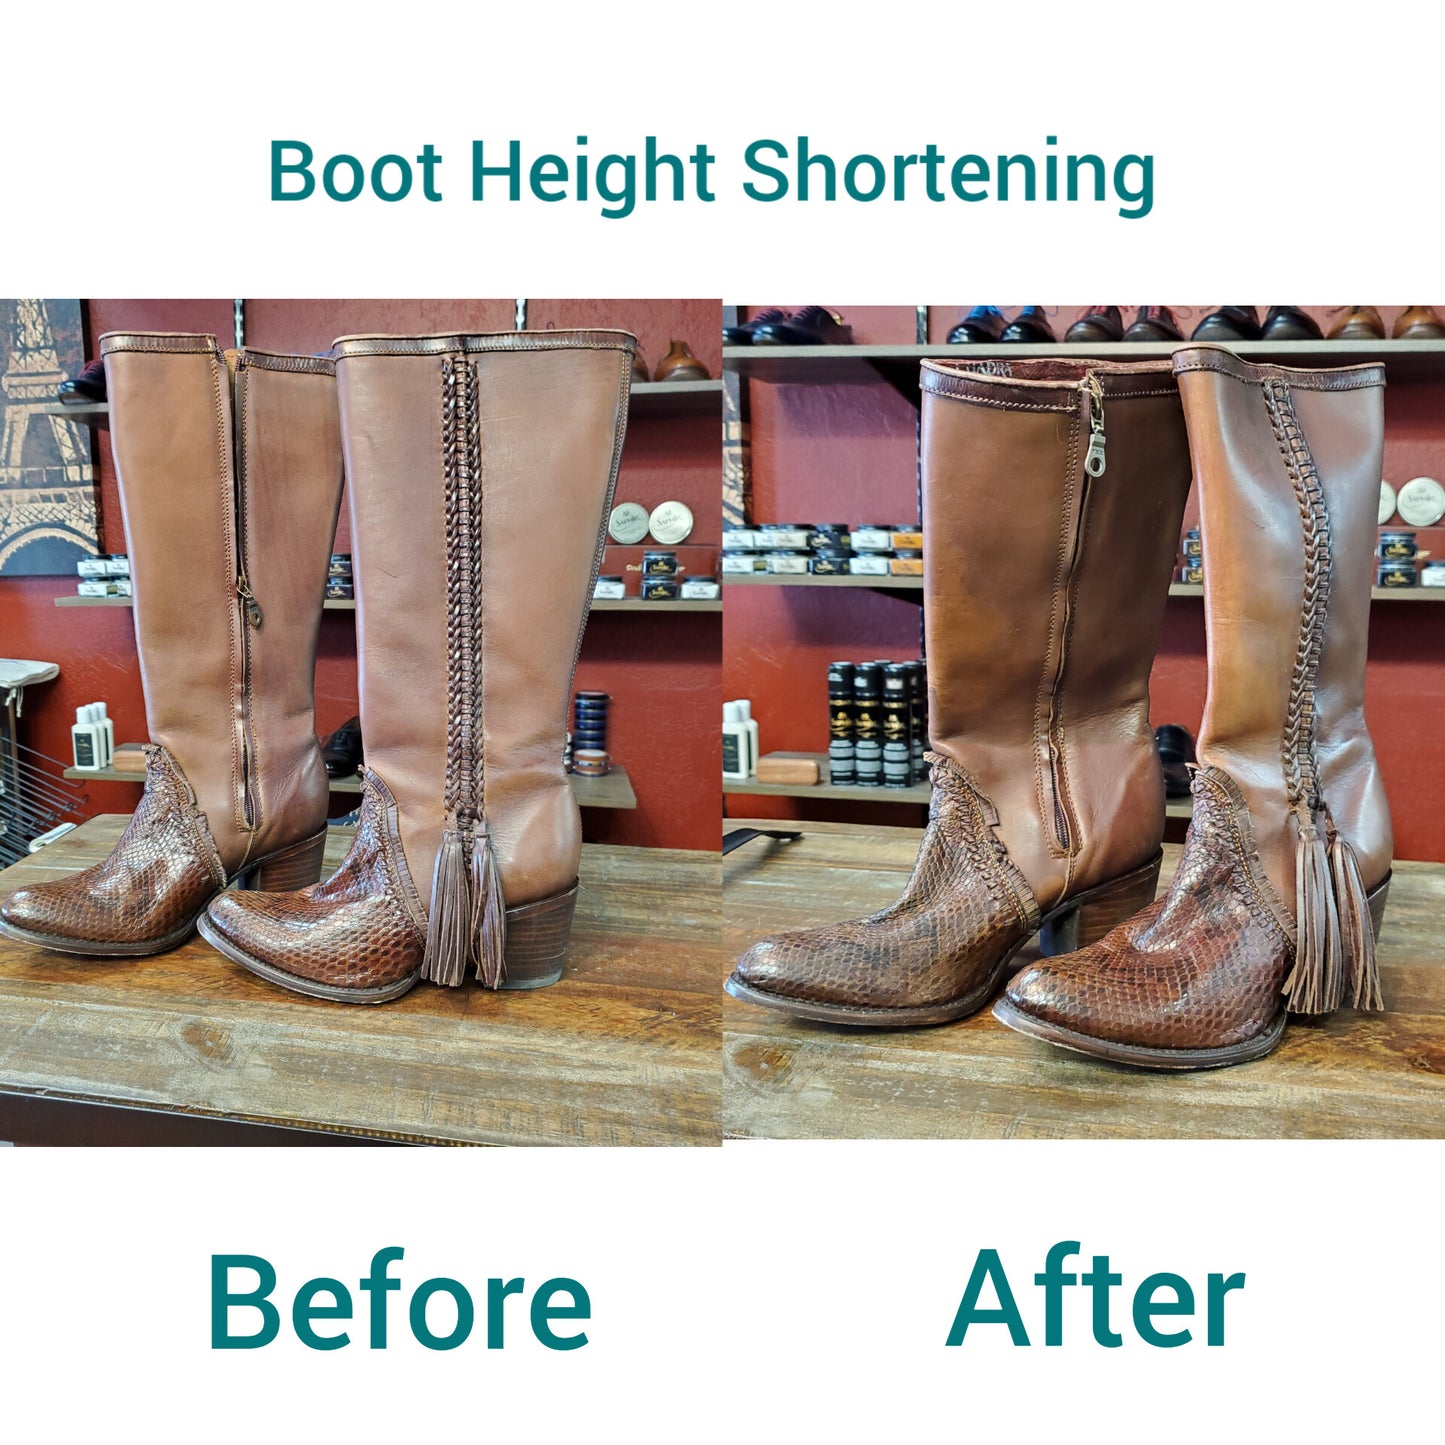 Boot Height Shortening